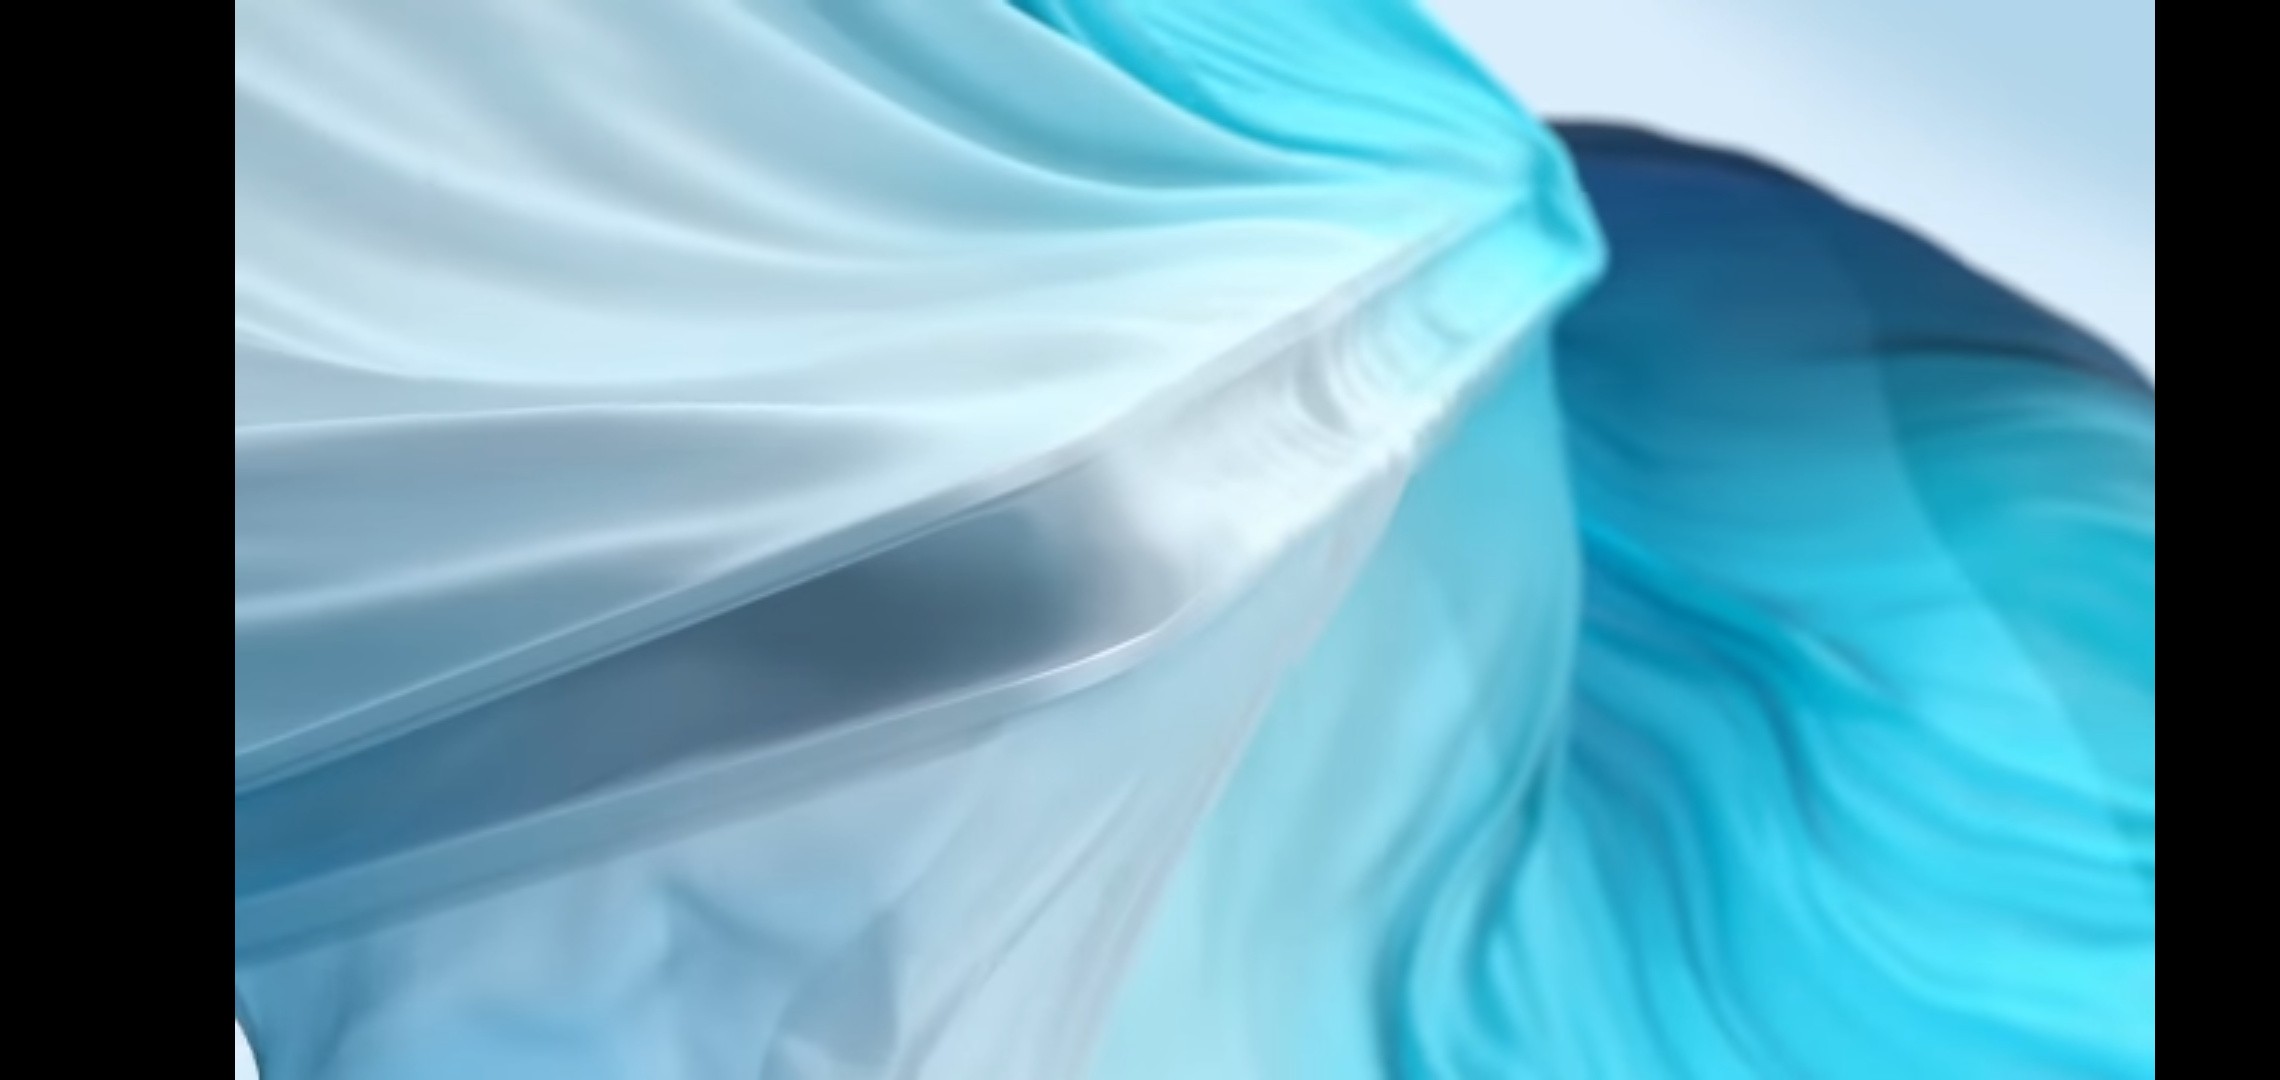 Transparent and translucent fabrics – Fabrickated